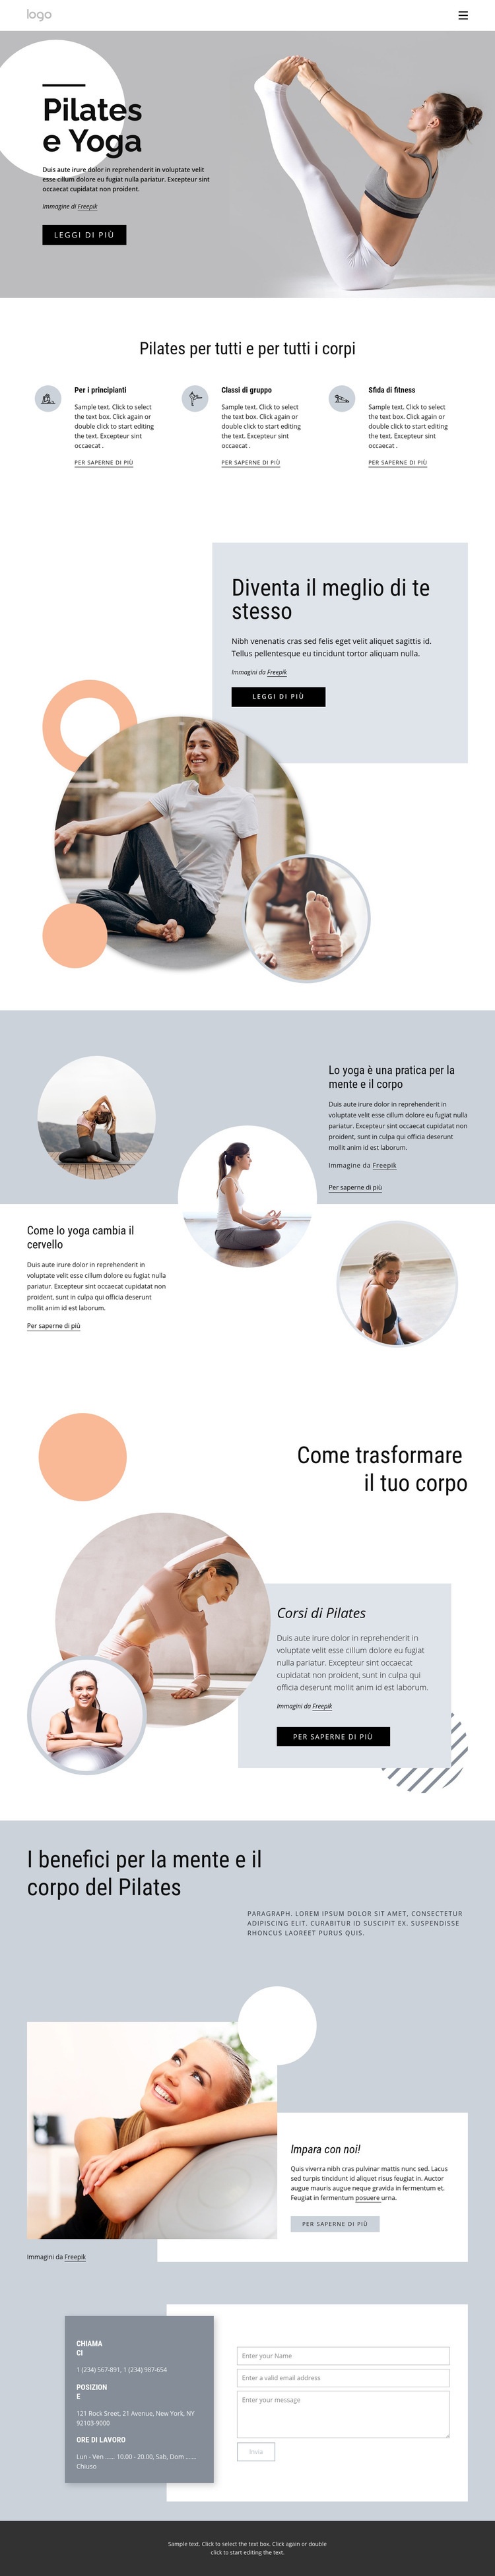 Centro pilates e yoga Modello HTML5